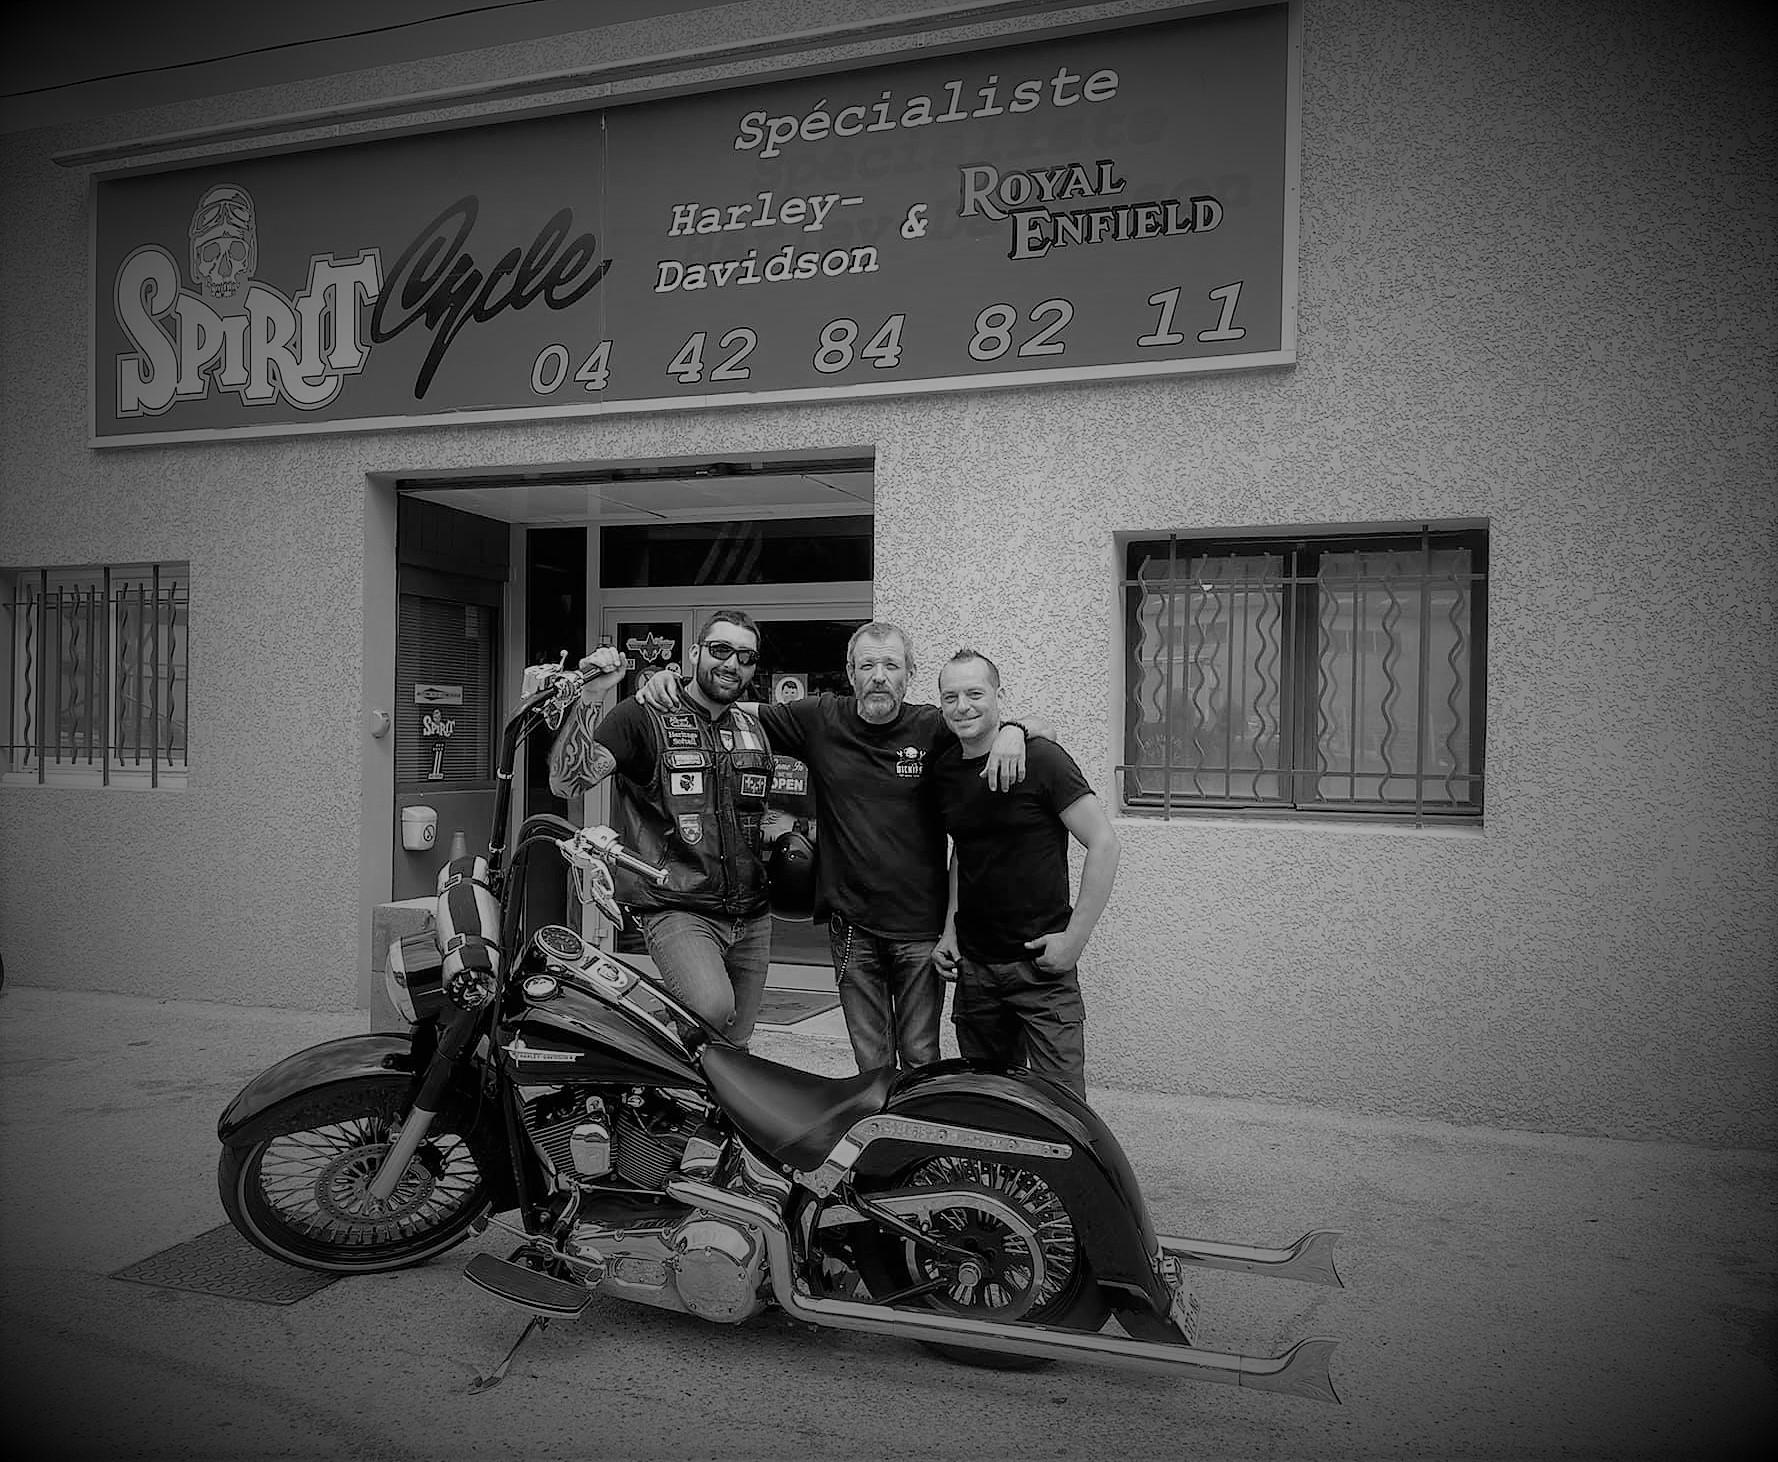 Spirit Cycle spécialiste Harley Davidson et Royal Enfield